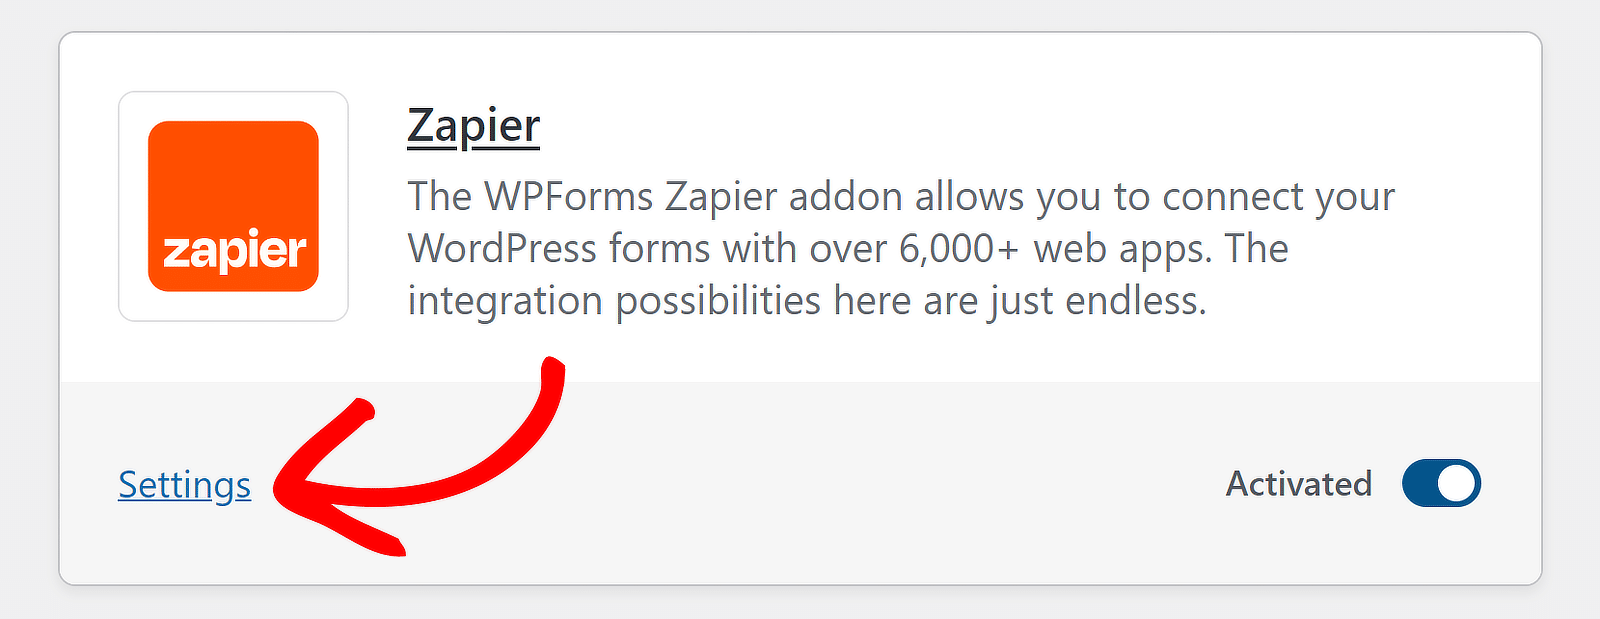 zapier settings option